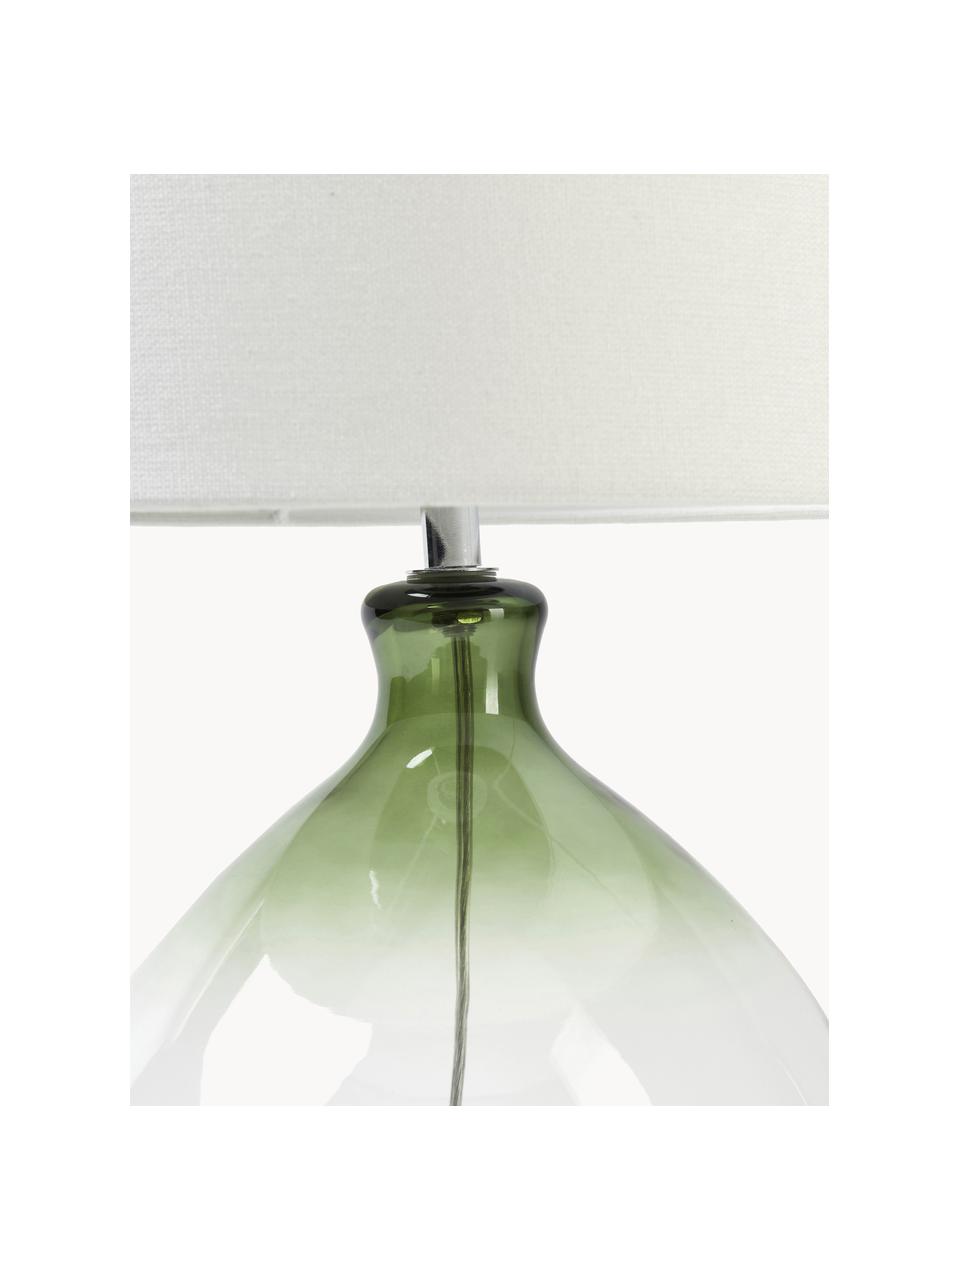 Grande lampe à poser en verre Zoya, Blanc, vert, Ø 30 x haut. 51 cm